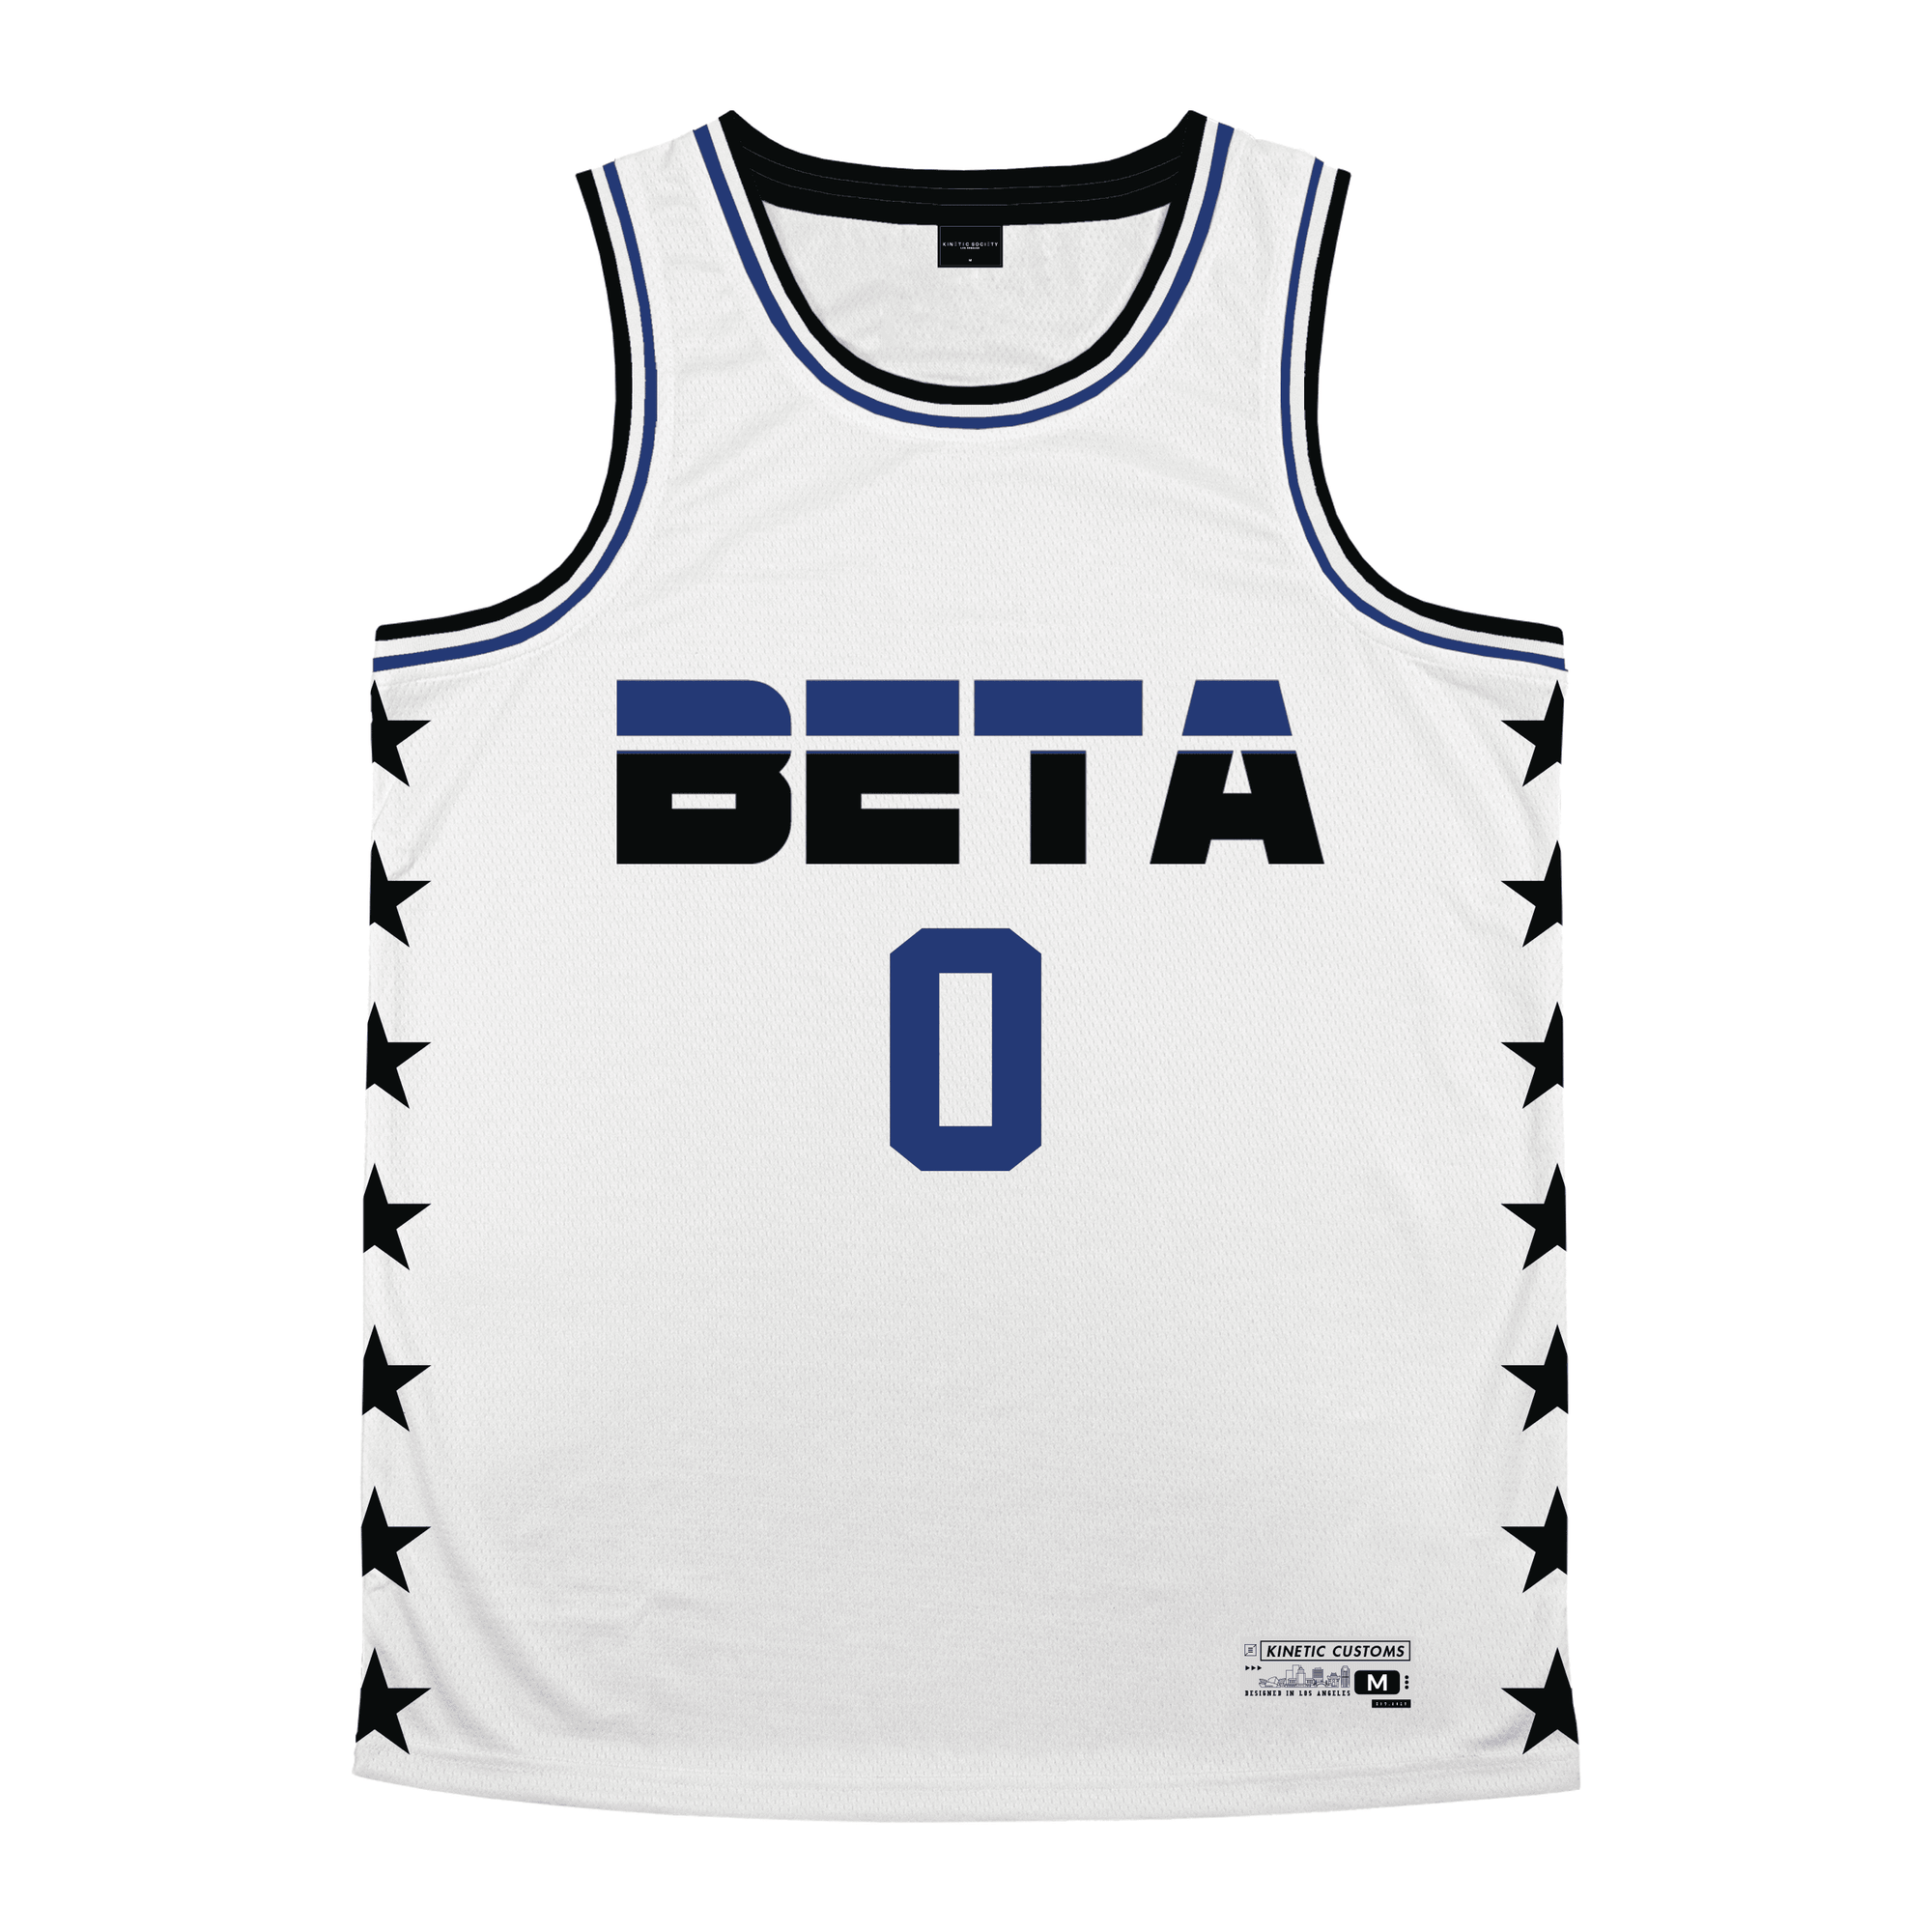 Beta Theta Pi - Black Star Basketball Jersey